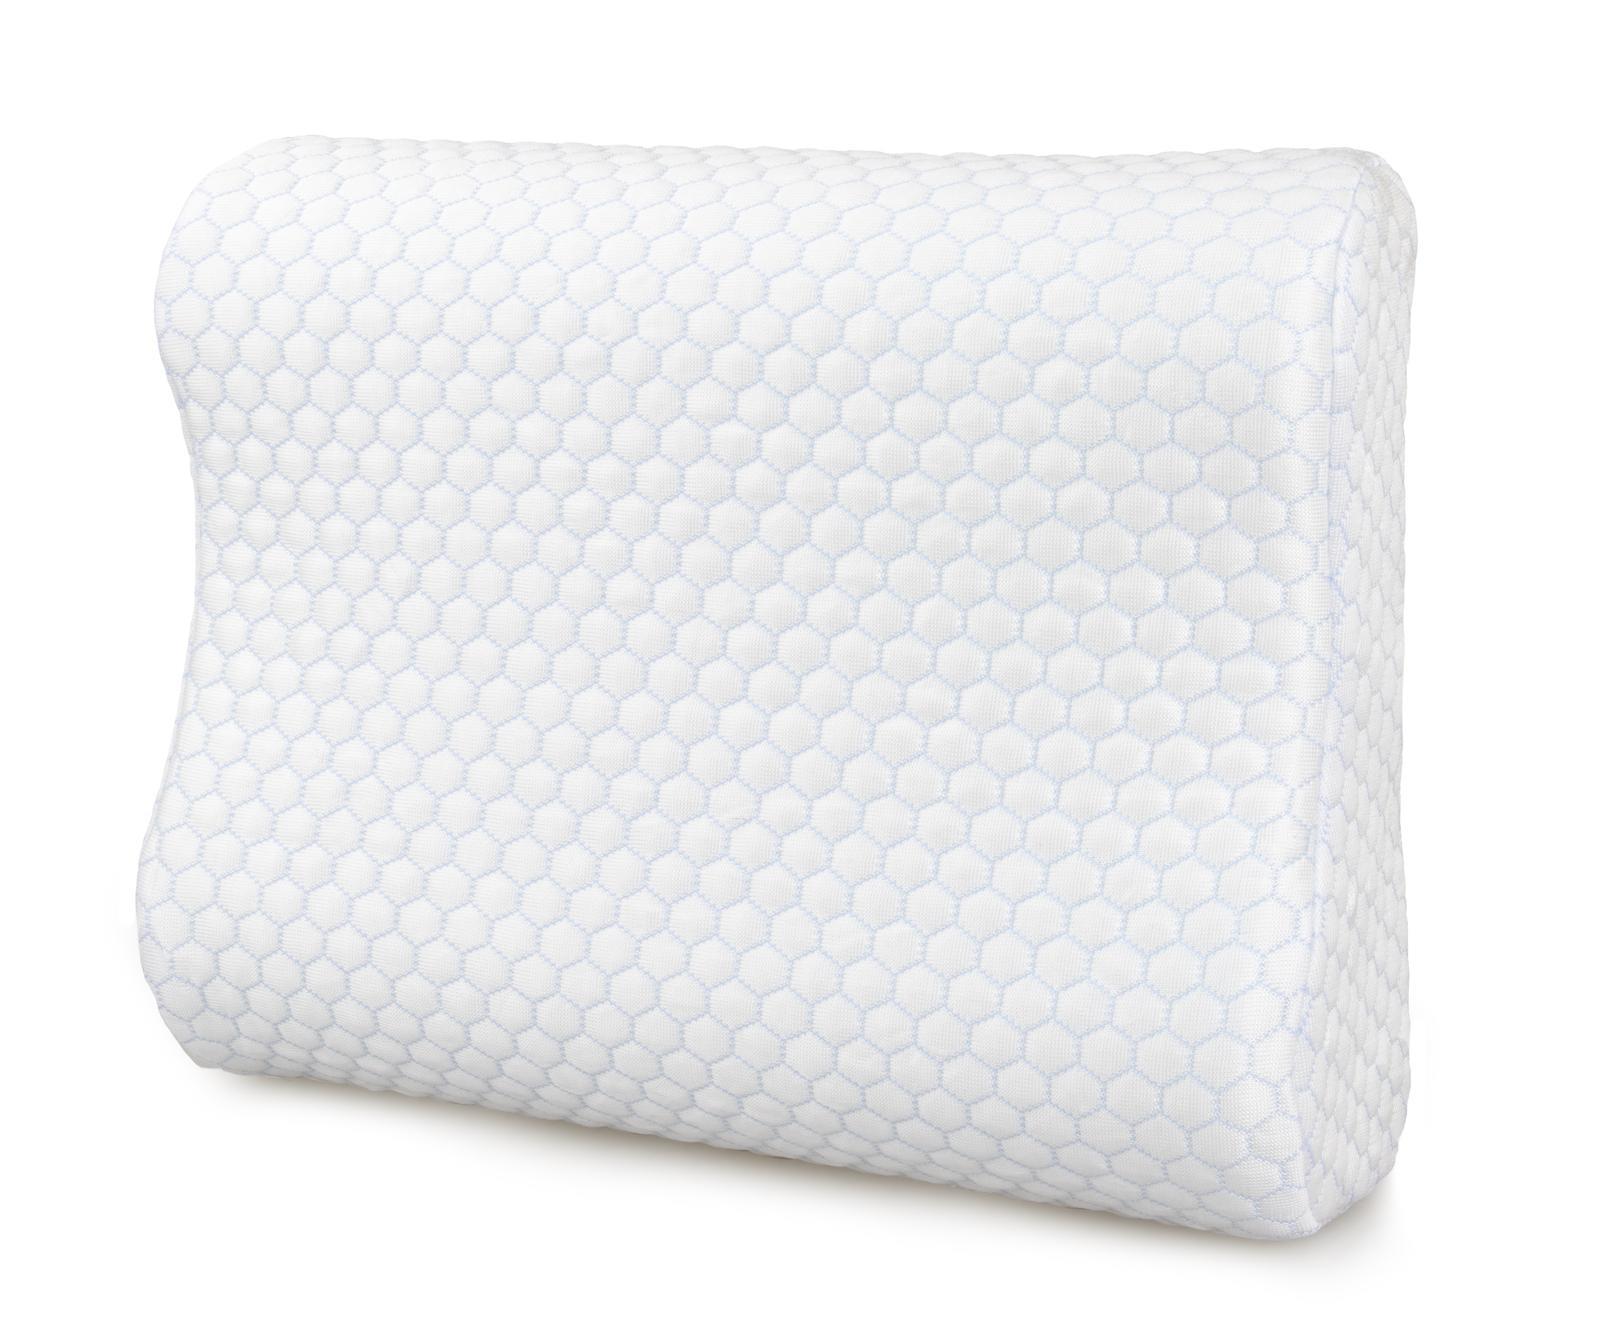 Ardor Contoured Cooling 60x40cm Memory Foam Soft Pillow Bed Sleeping Cushion WHT